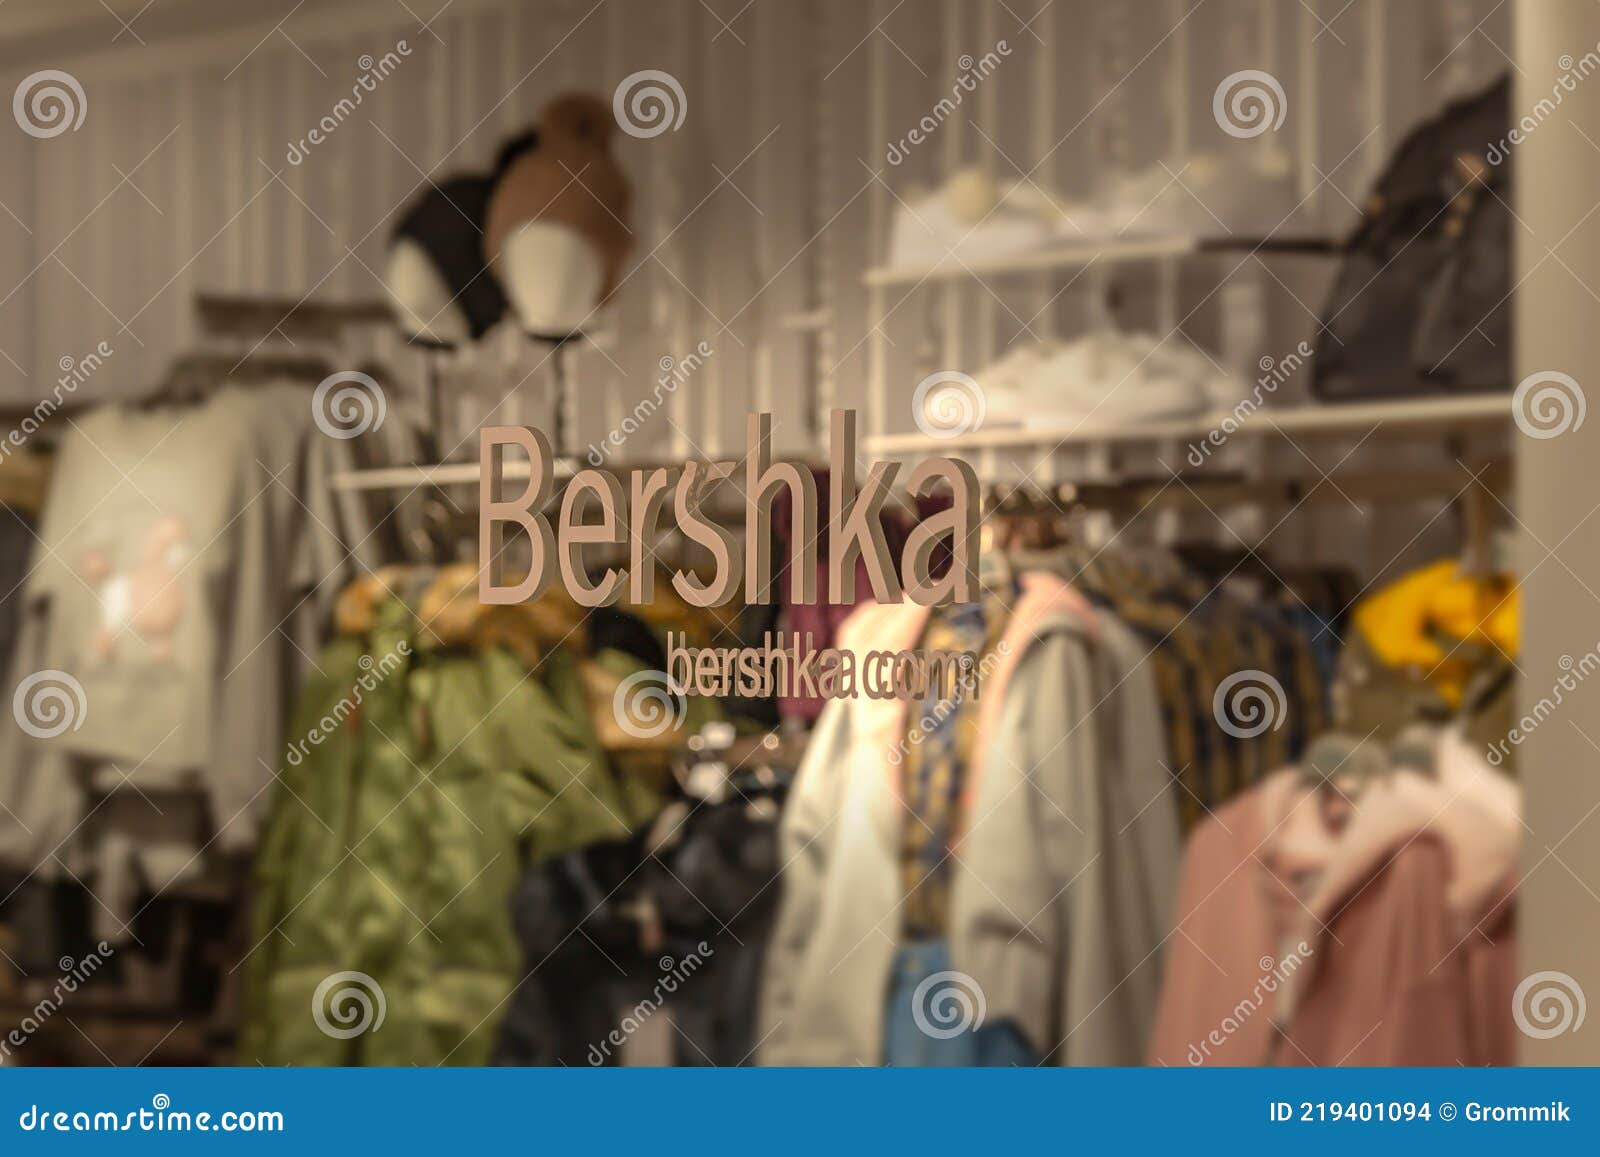 SPAIN, BARCELONA - May 11, 2021: Bershka Store Name Editorial Stock ...